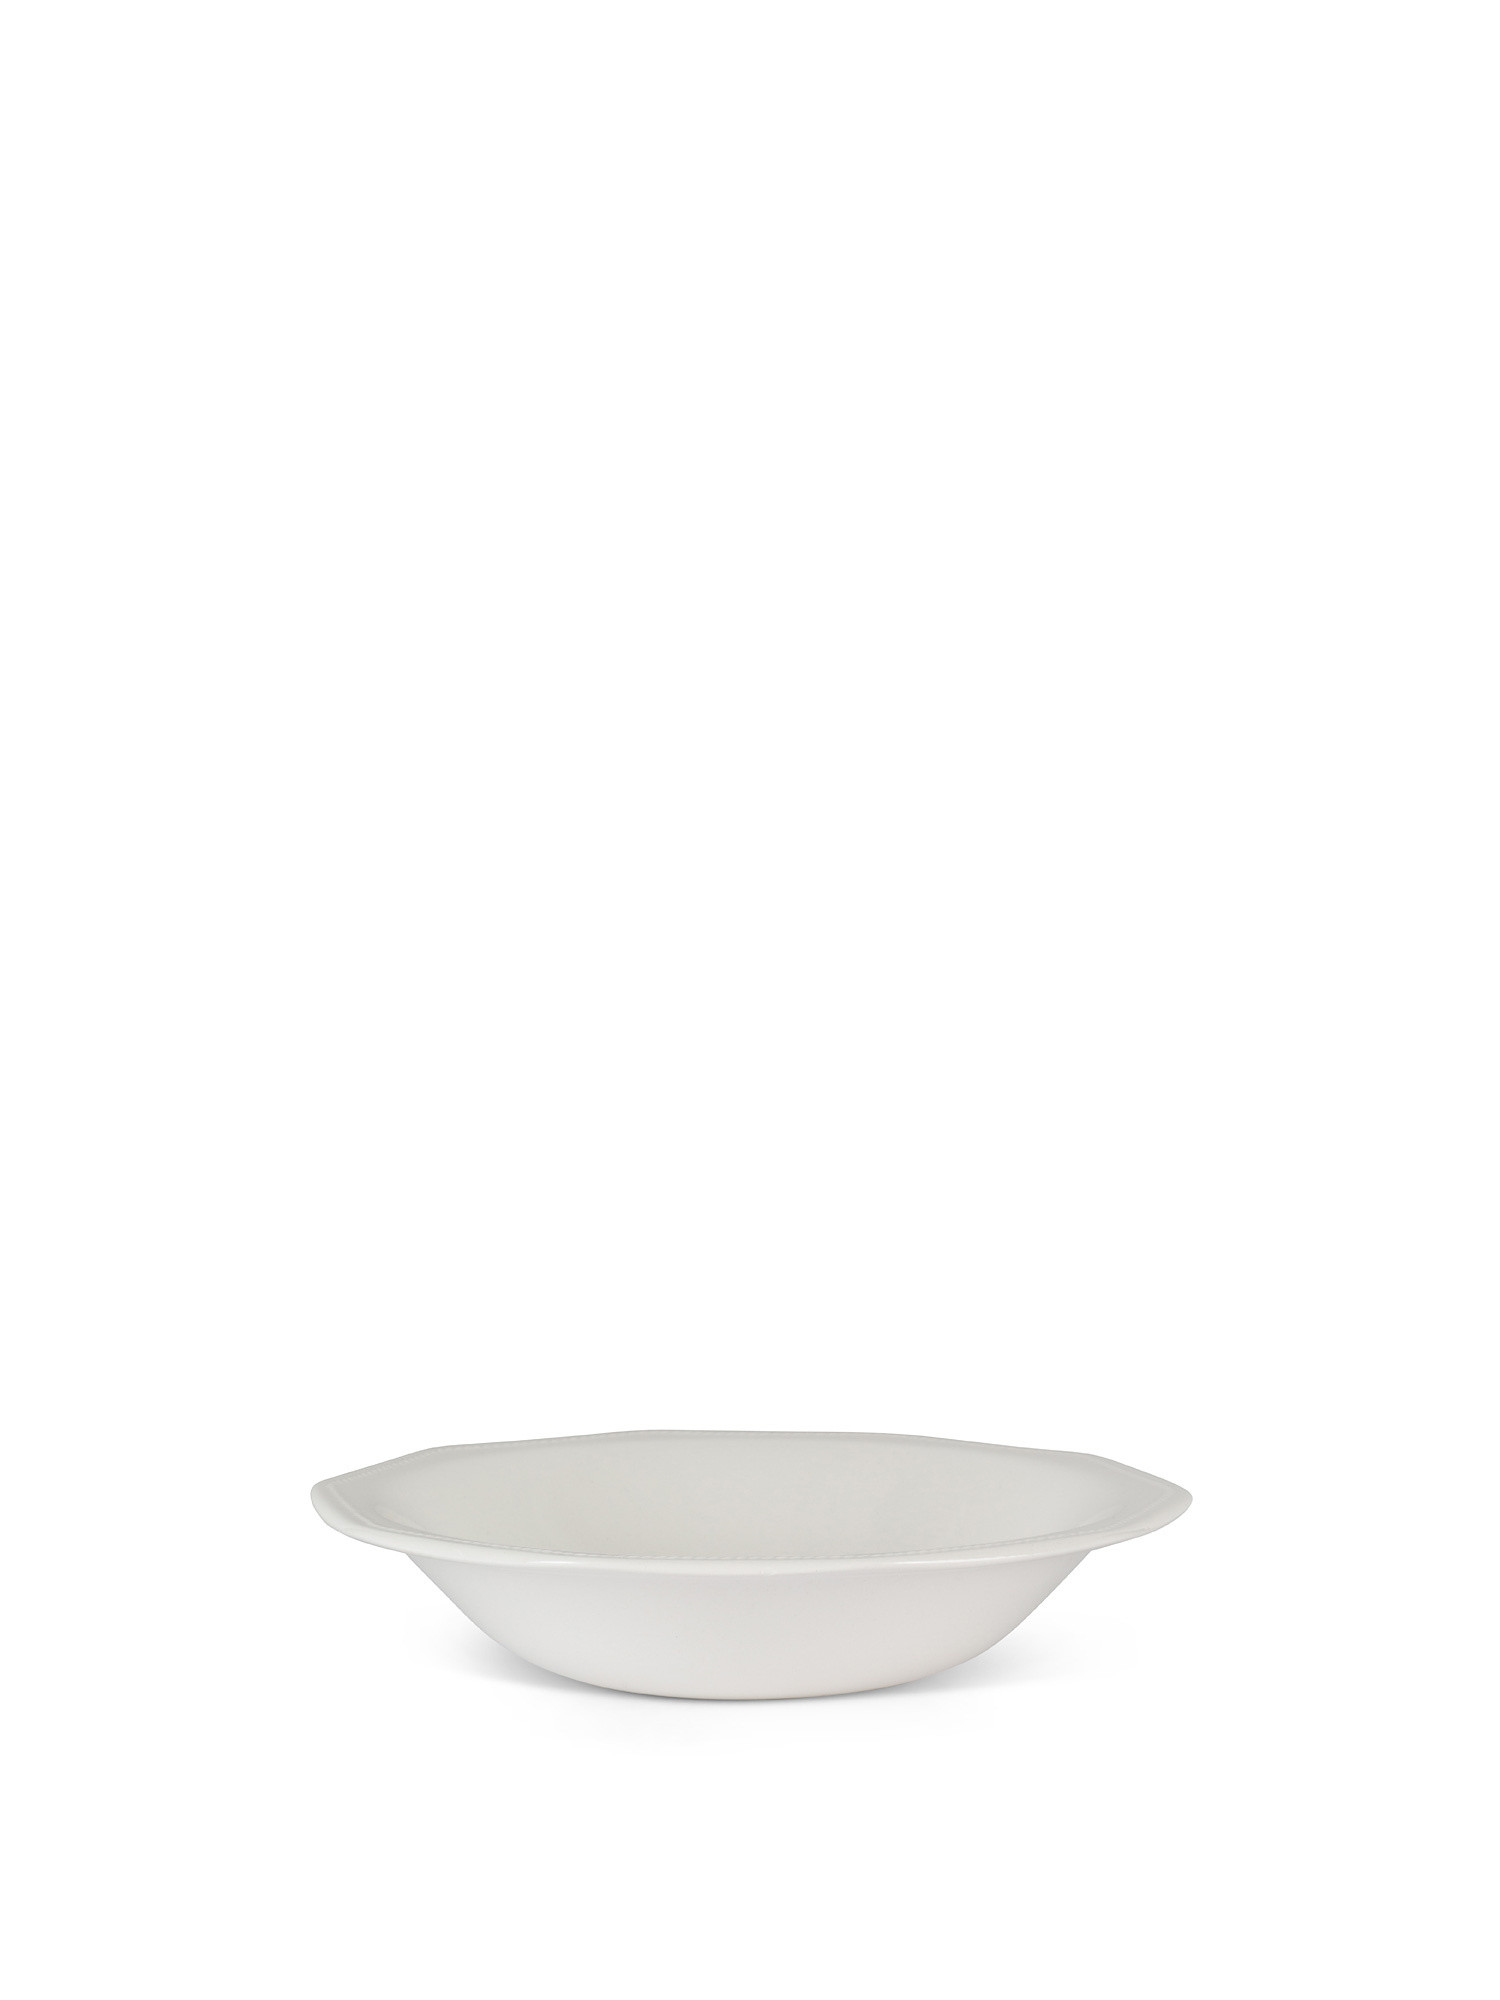 Artic White ceramic salad bowl, White, large image number 0